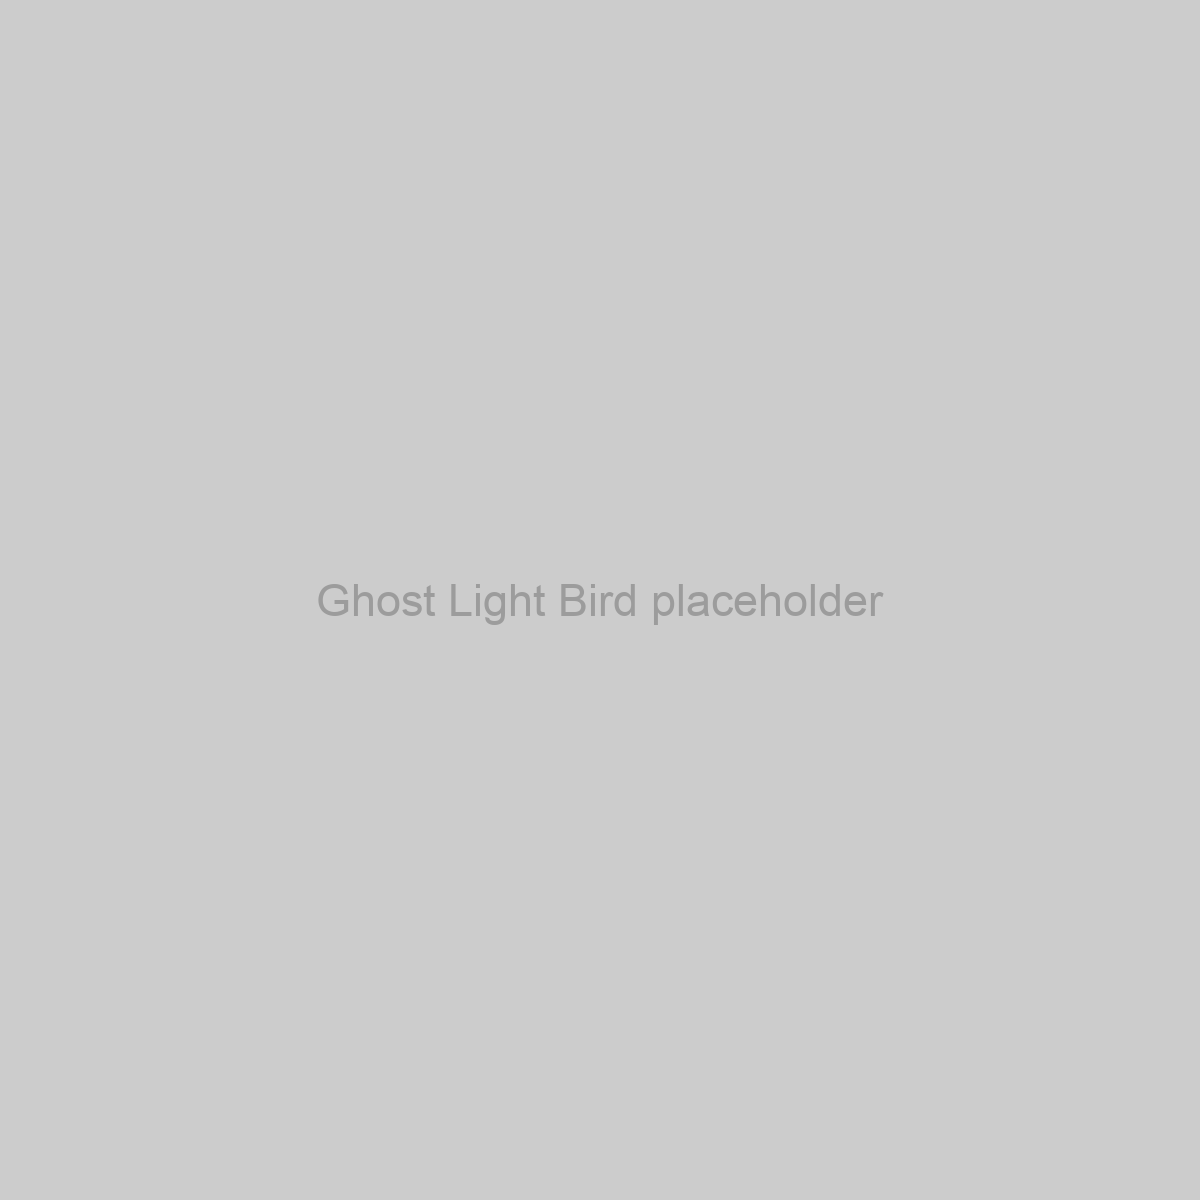 Ghost Light Bird Placeholder Image